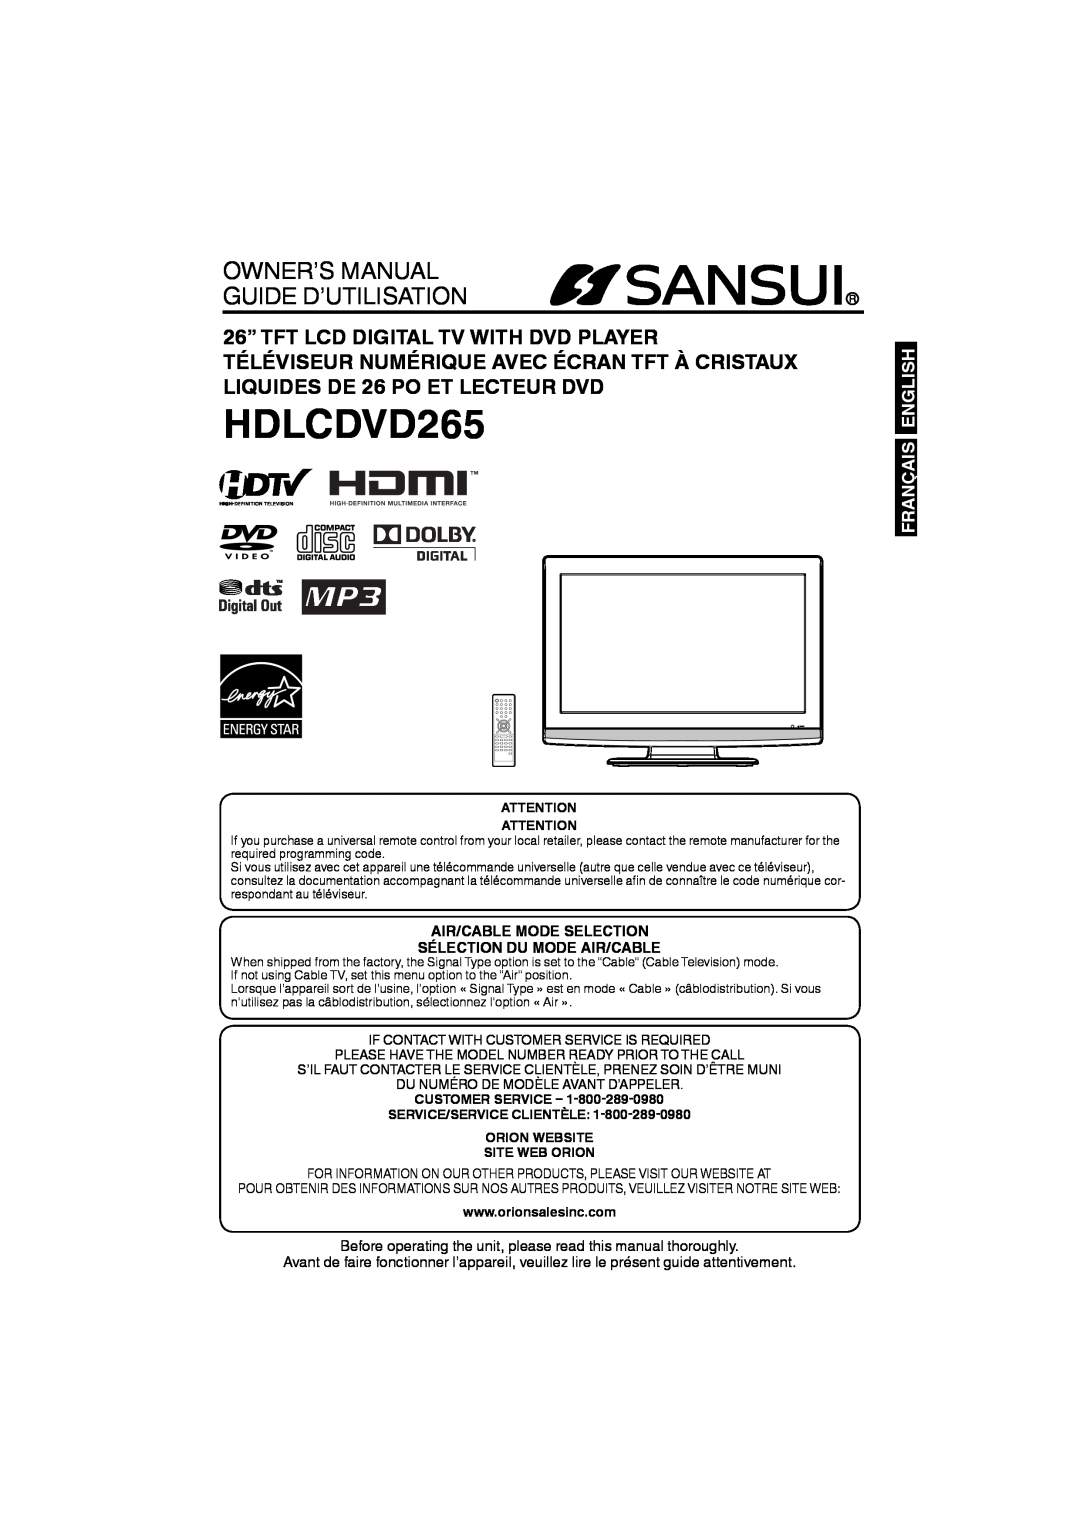 Sansui HDLCDVD265 owner manual Air/Cable Mode Selection Sélection Du Mode Air/Cable, Owner’S Manual Guide D’Utilisation 